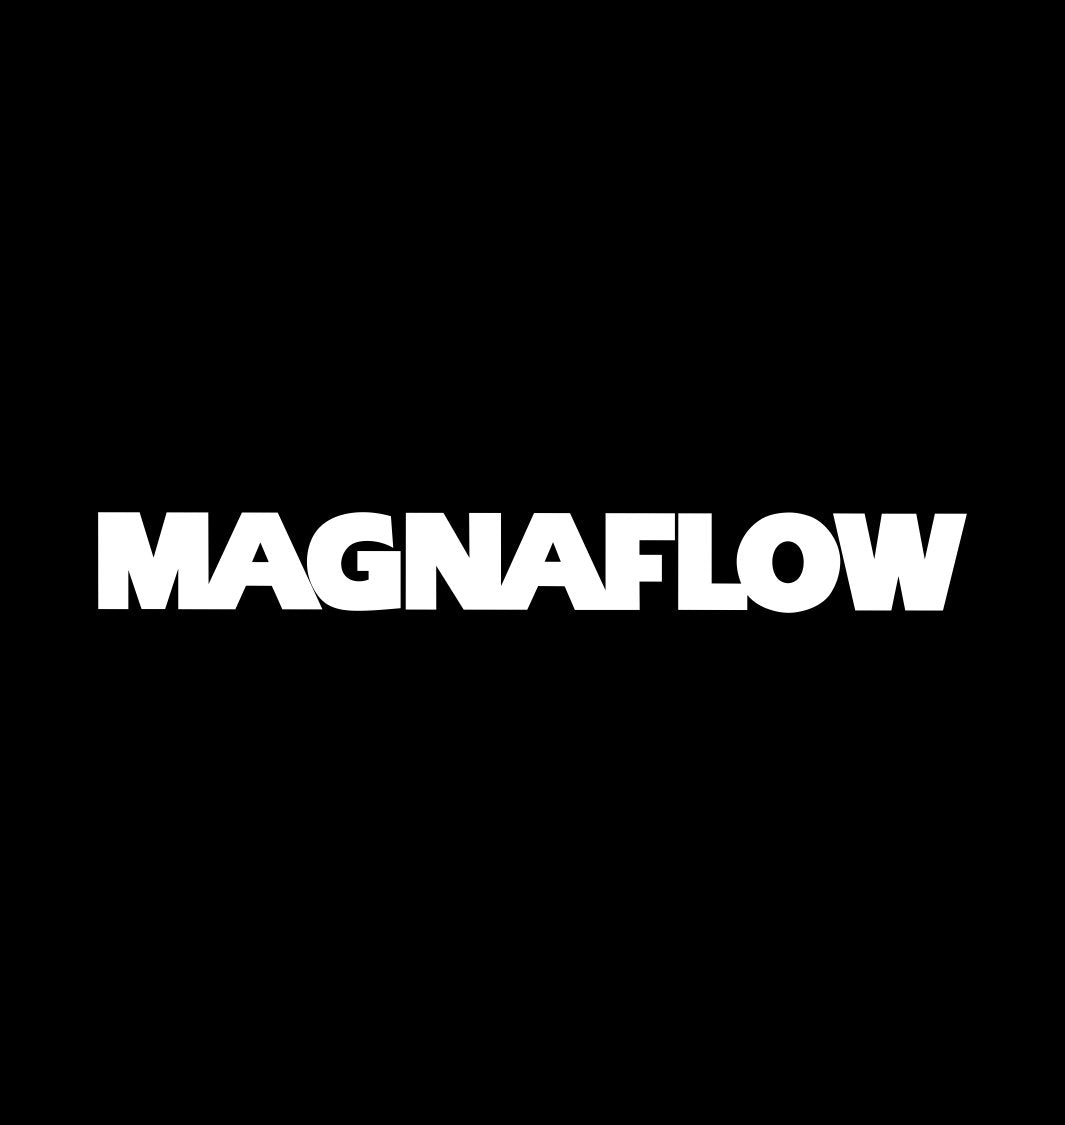 Magnaflow decal B